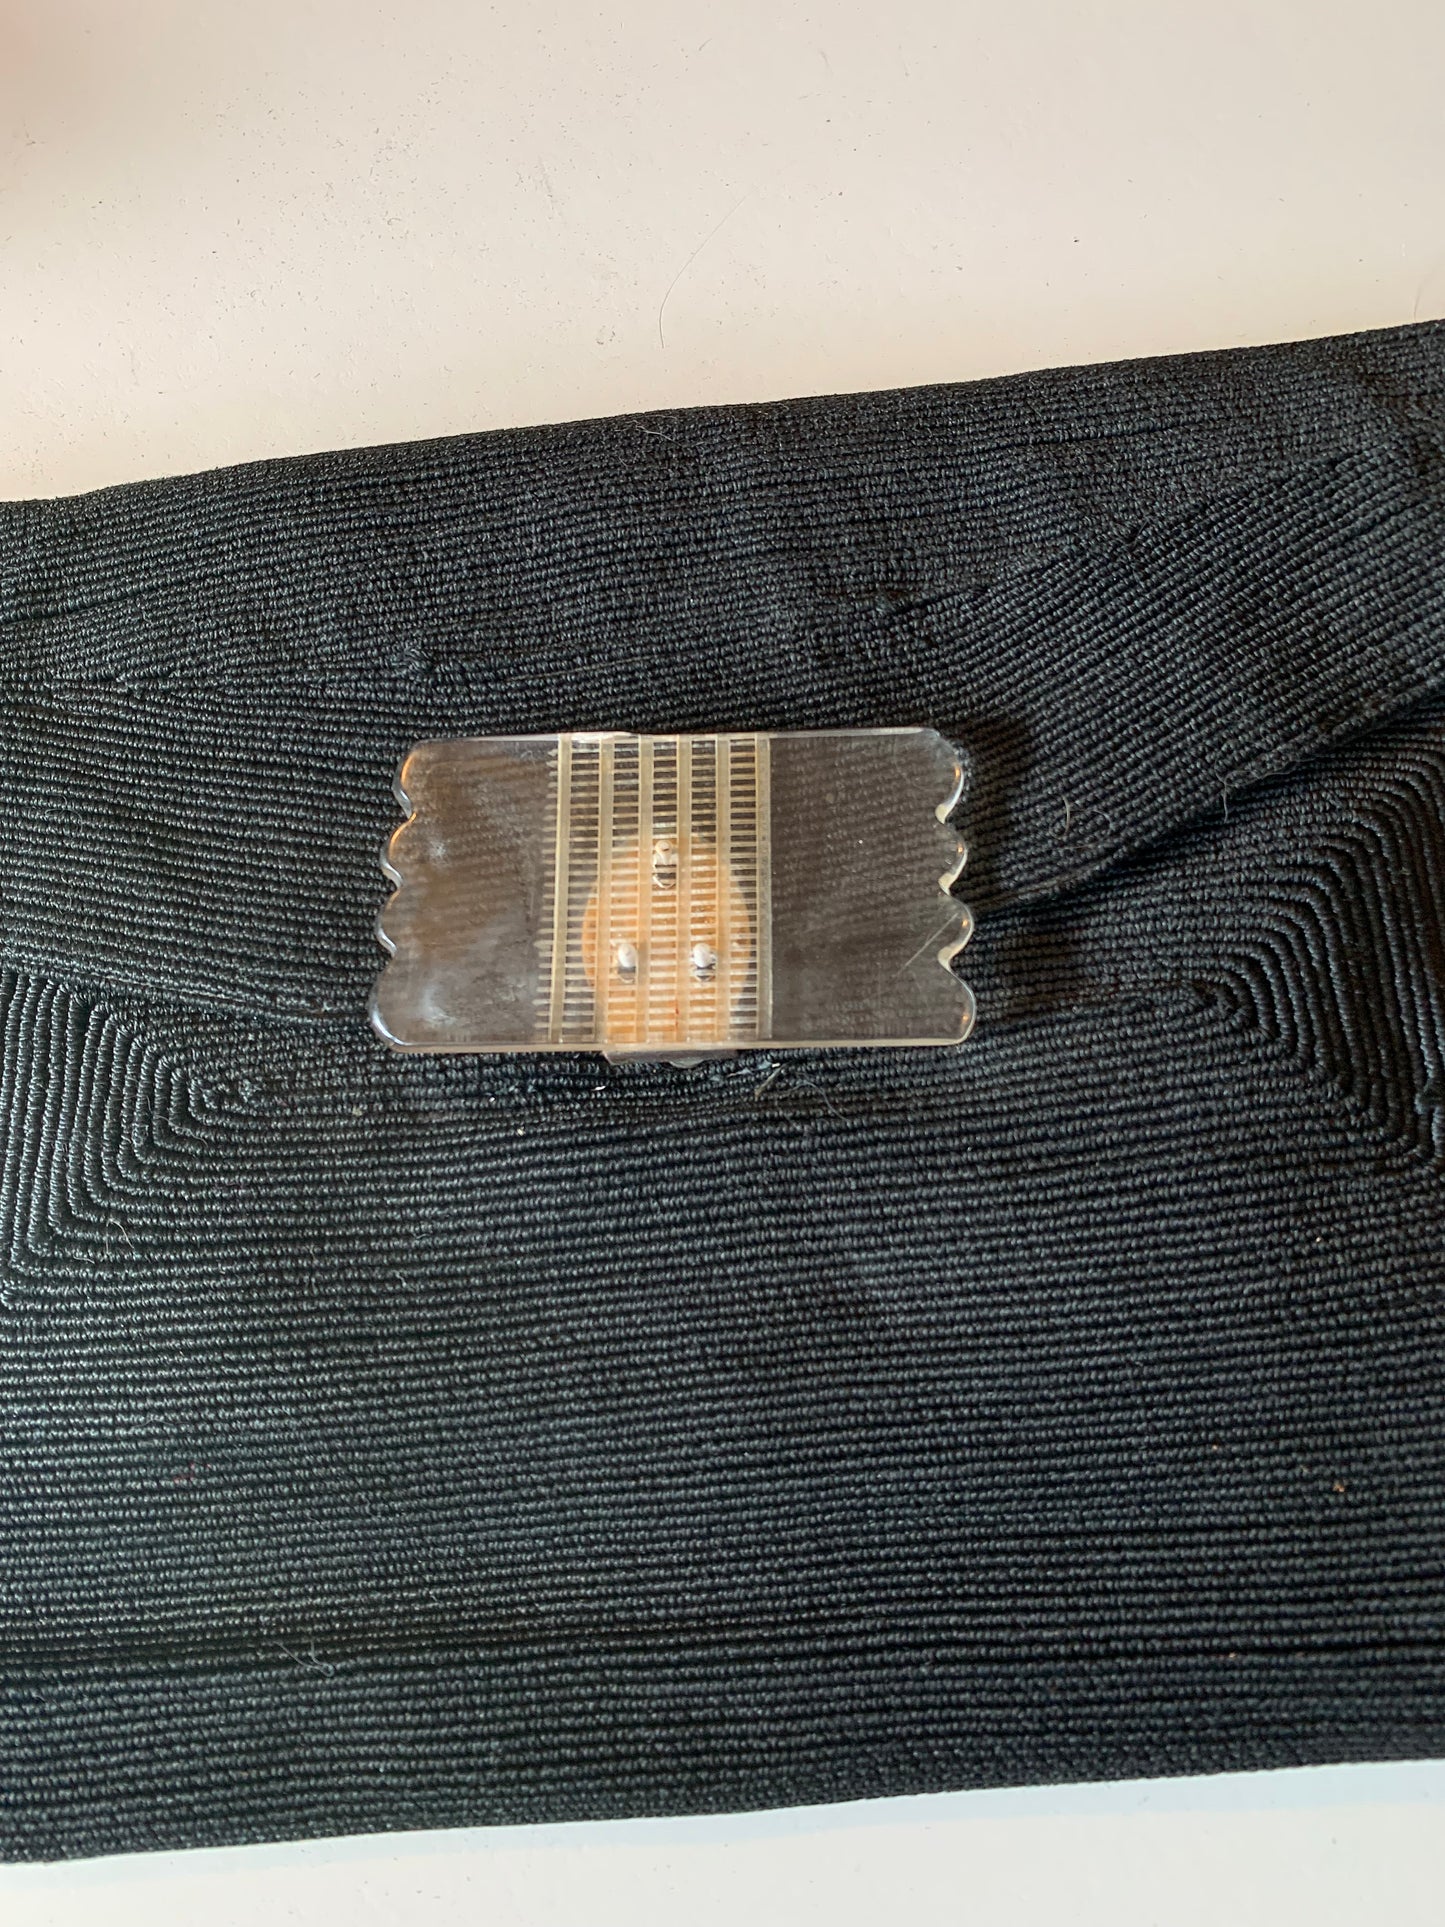 Black Cordé Style Envelope Handbag with Lucite Folding Clasp circa 1940s